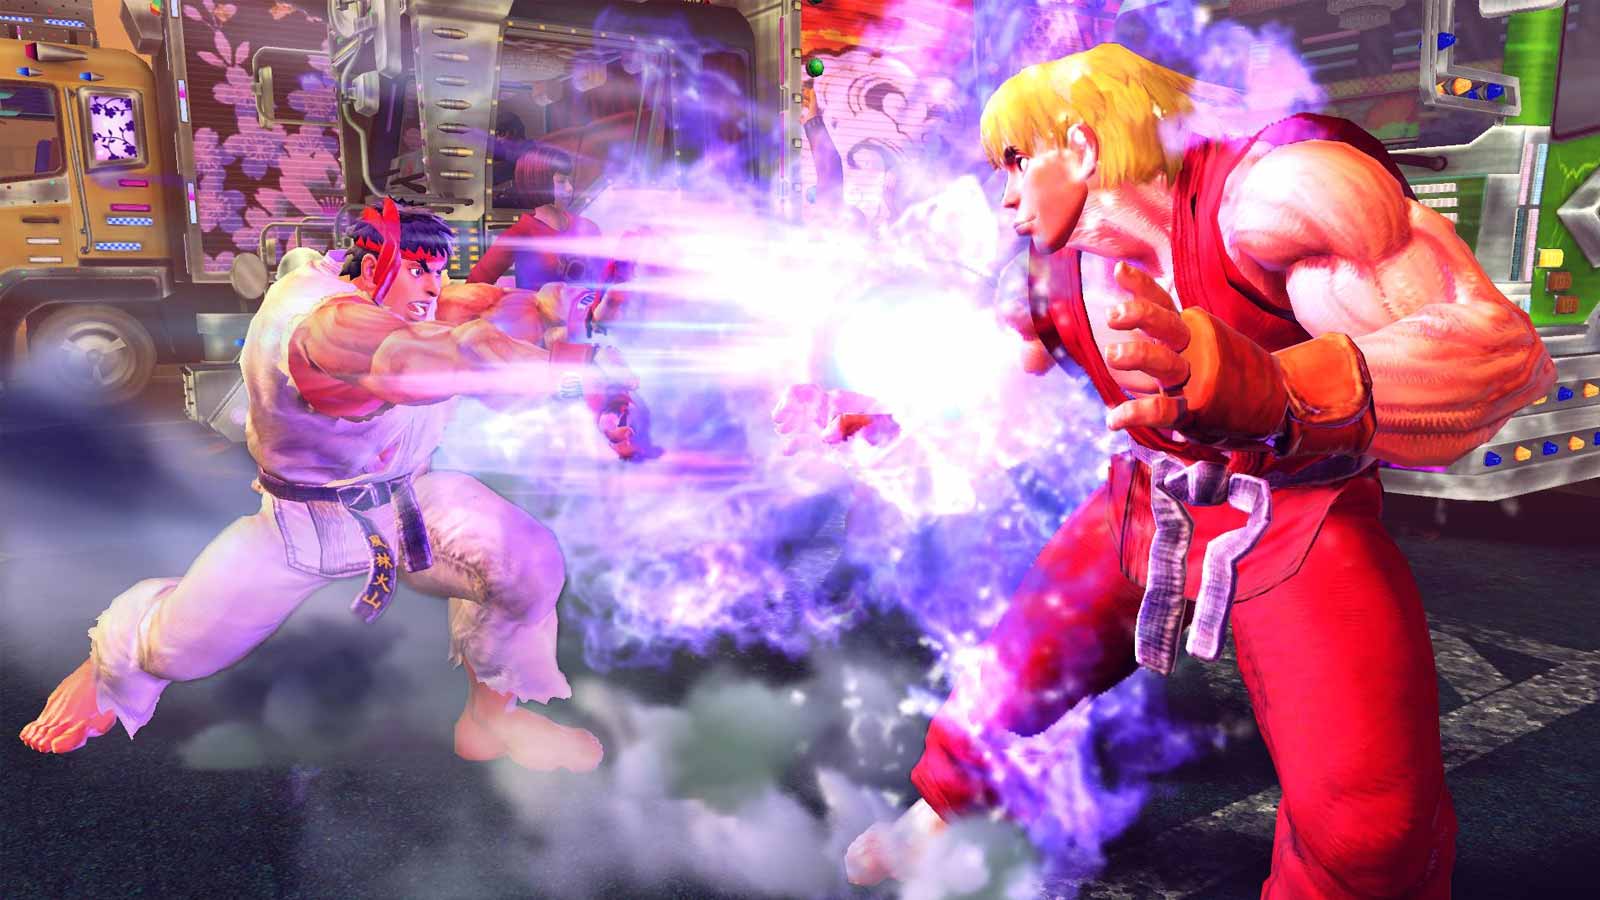 Ken in Street Fighter 6 is not divorced, but he is in pretty bad